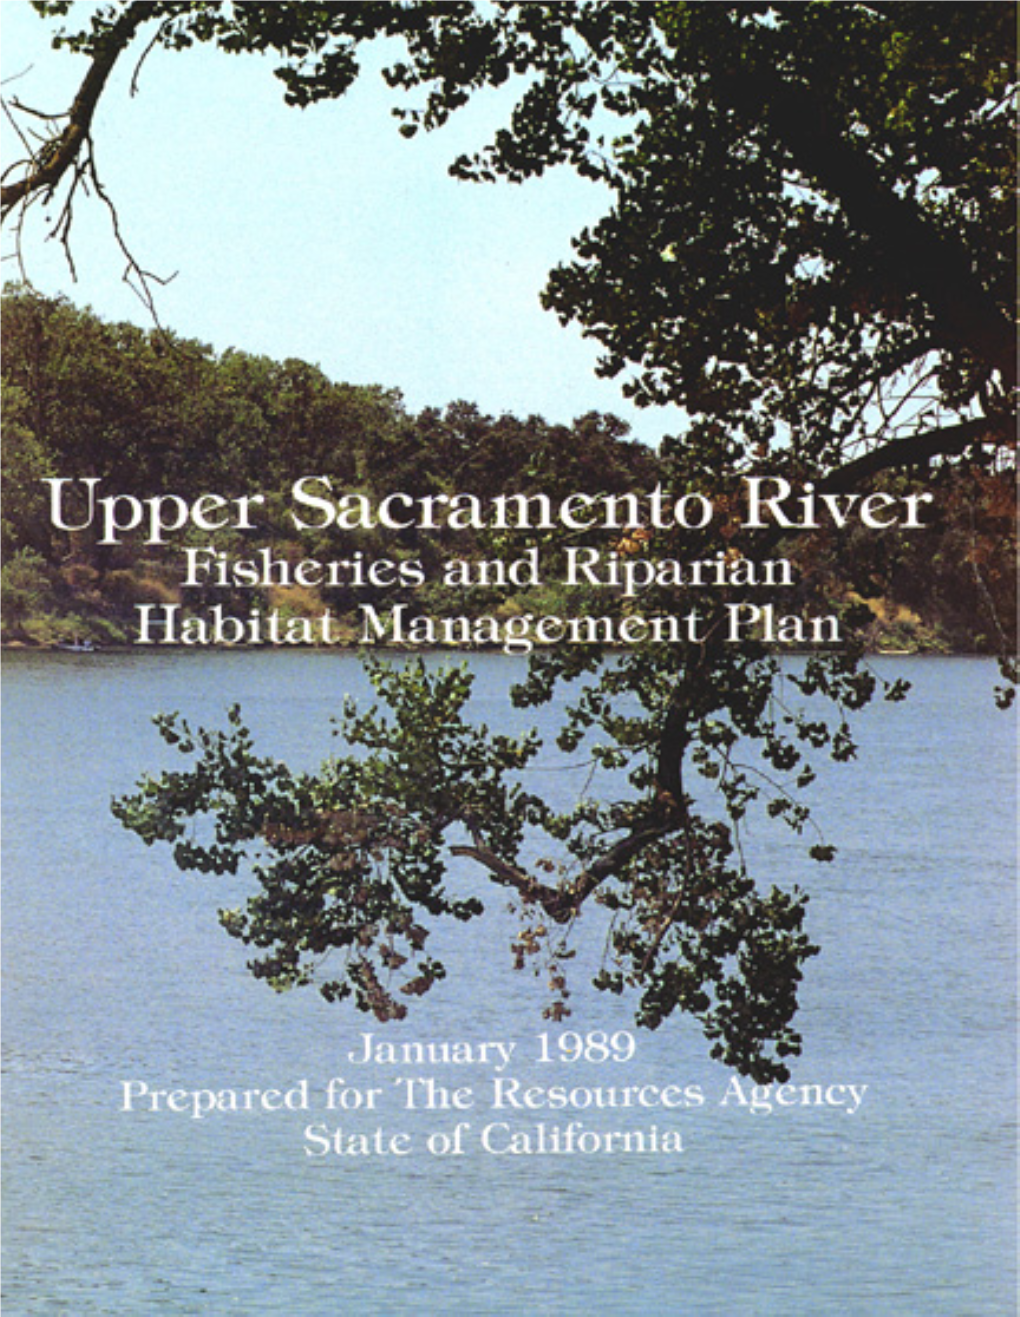 Upper Sacramento River Fisheries and Riparian Habitat Management Plan